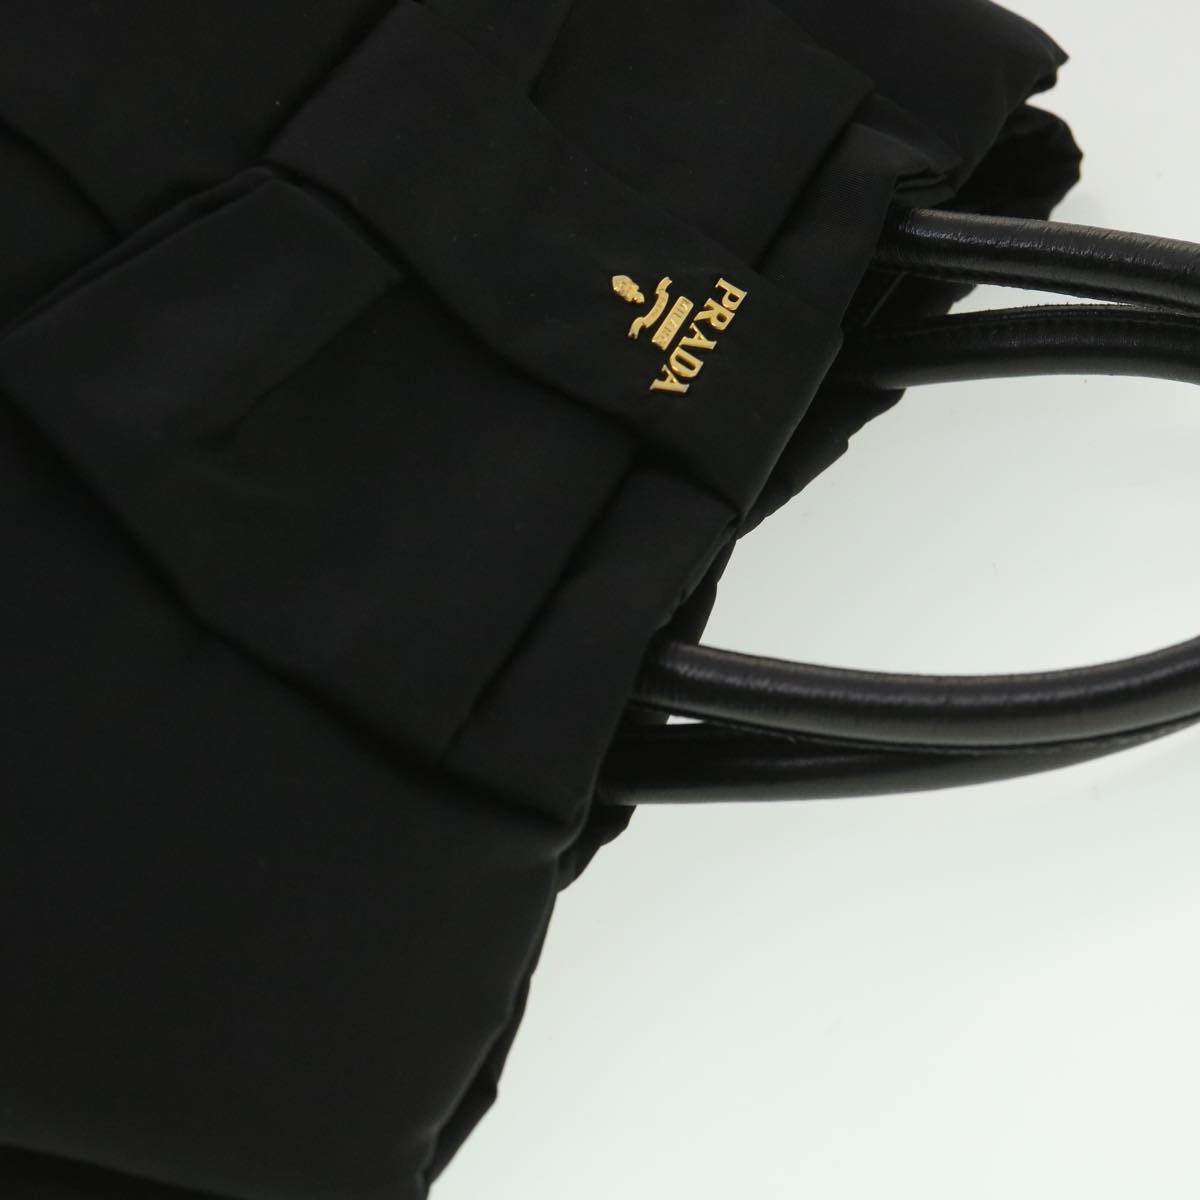 PRADA Hand Bag Nylon Black Auth 33979